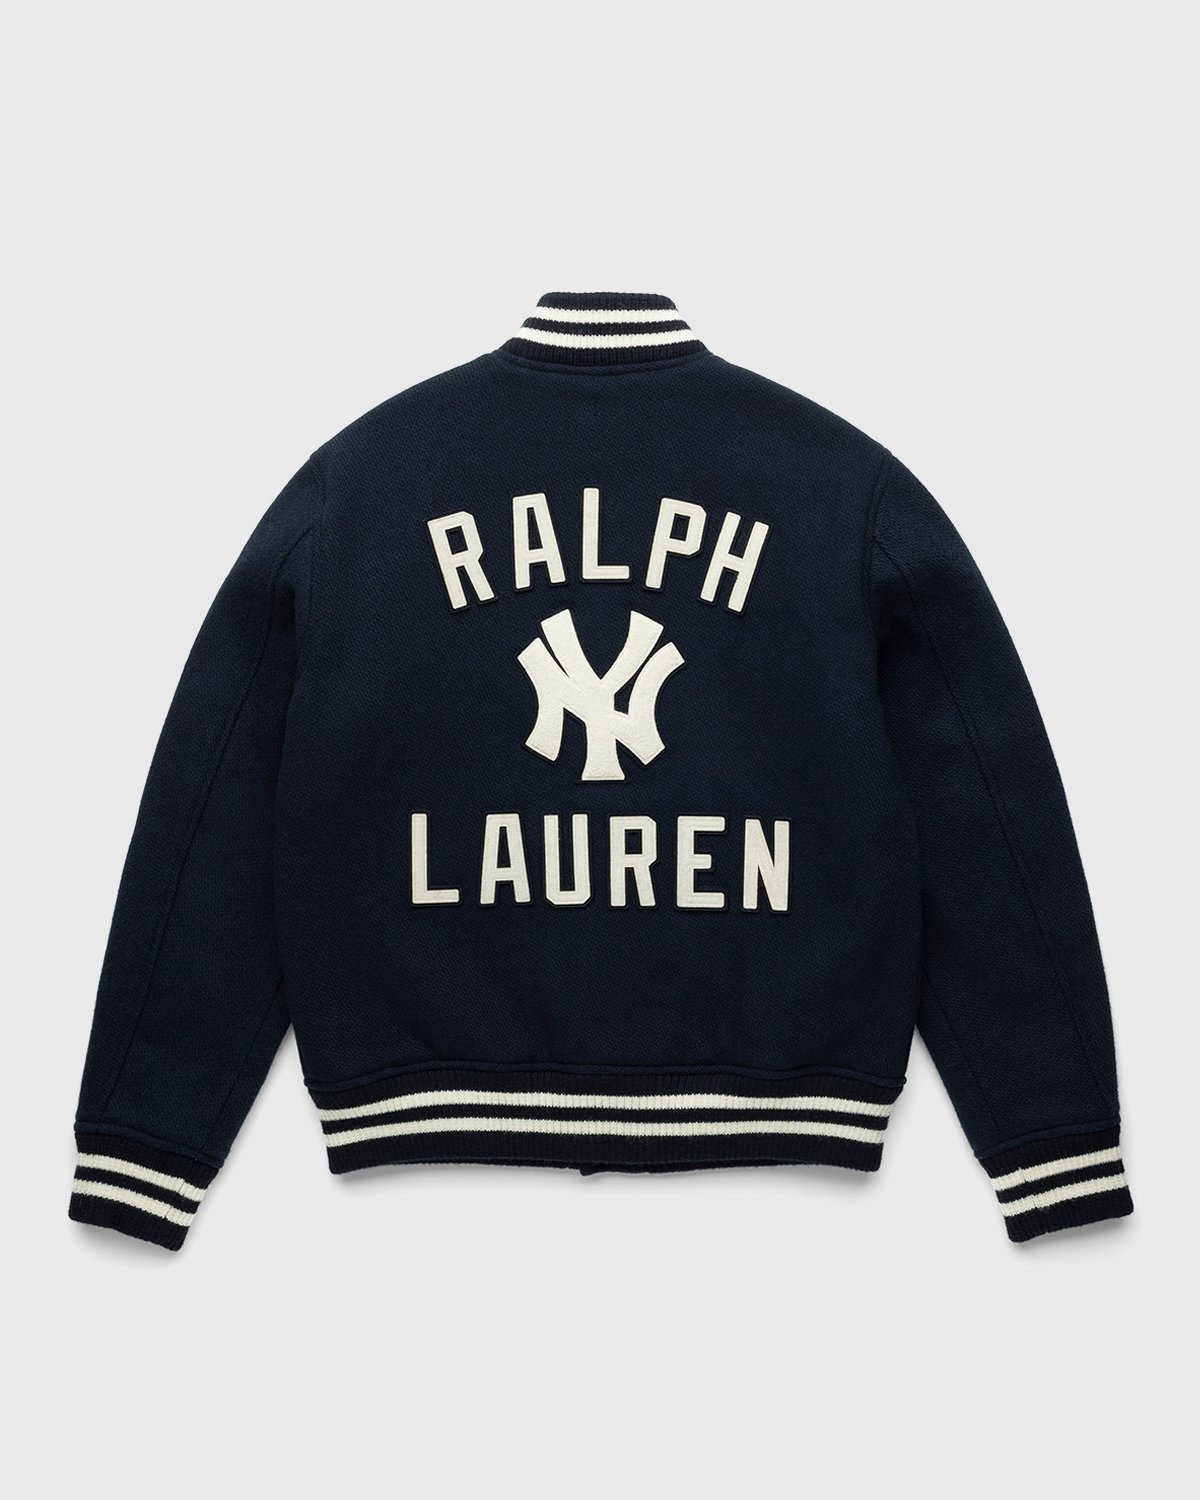 New York Yankees Mlb Bronx Bombers Personalized Polo Shirts